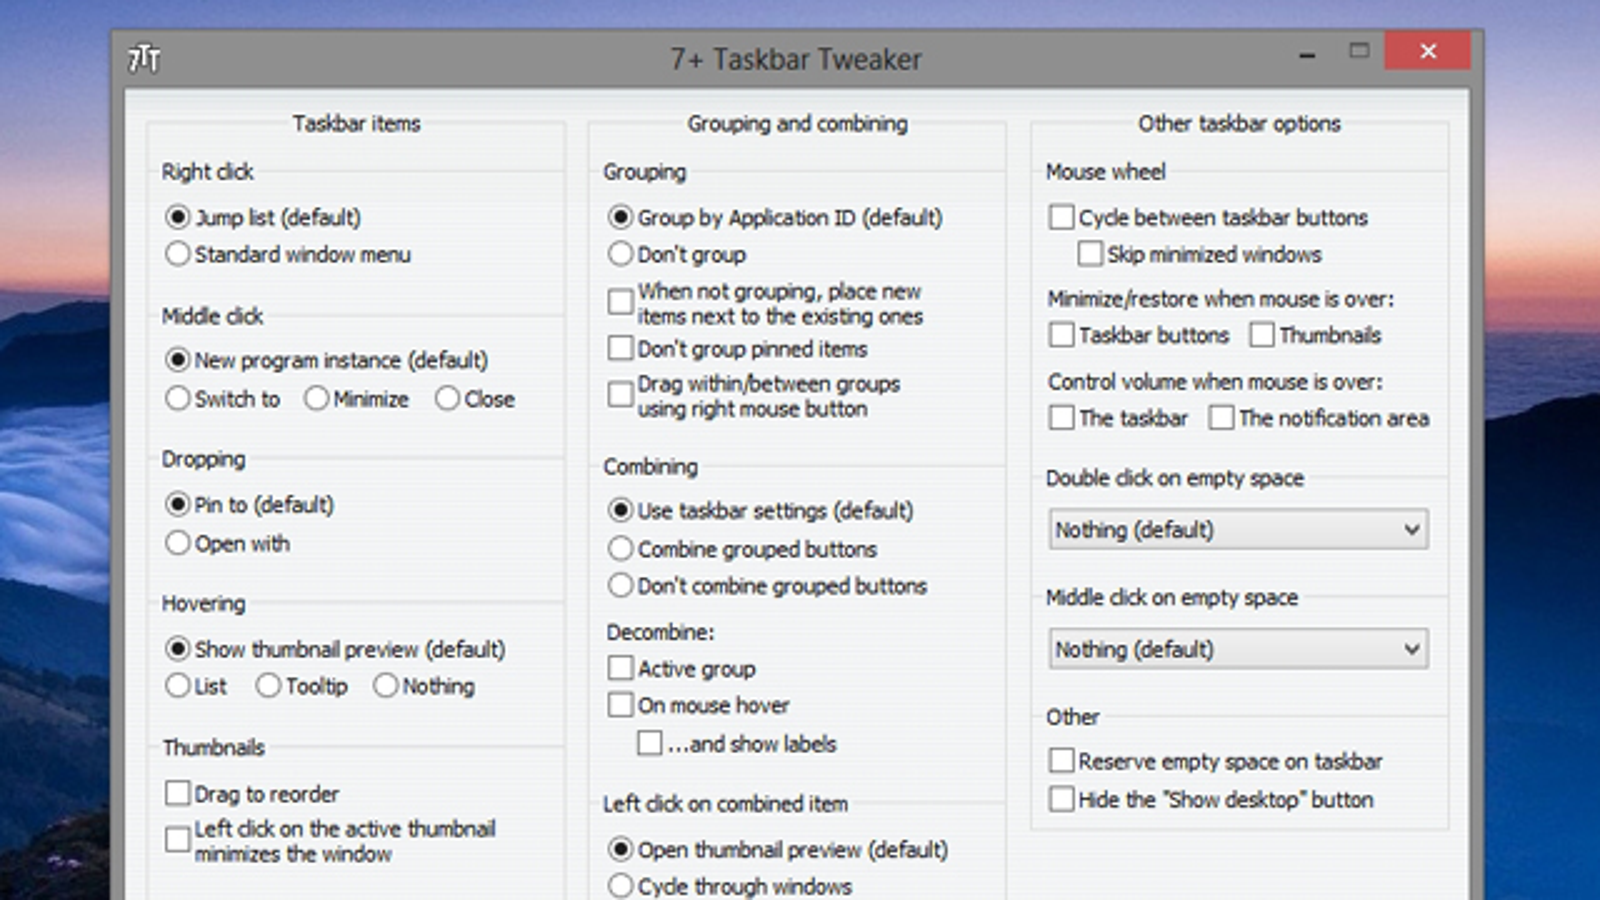 download 7+ Taskbar Tweaker 5.14.3.0 free